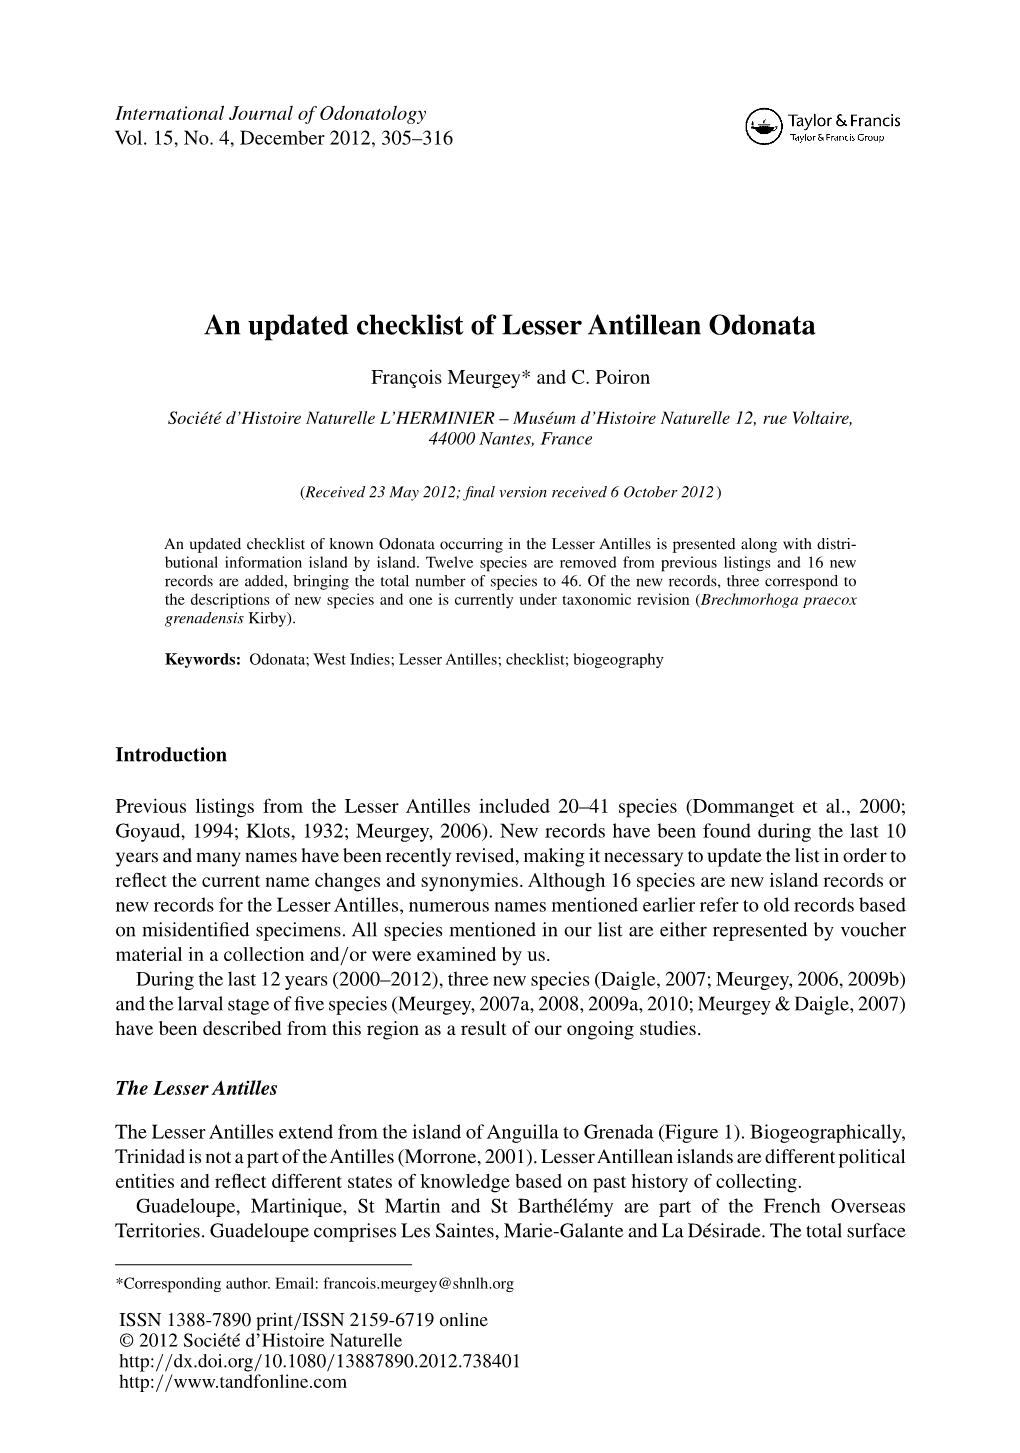 An Updated Checklist of Lesser Antillean Odonata